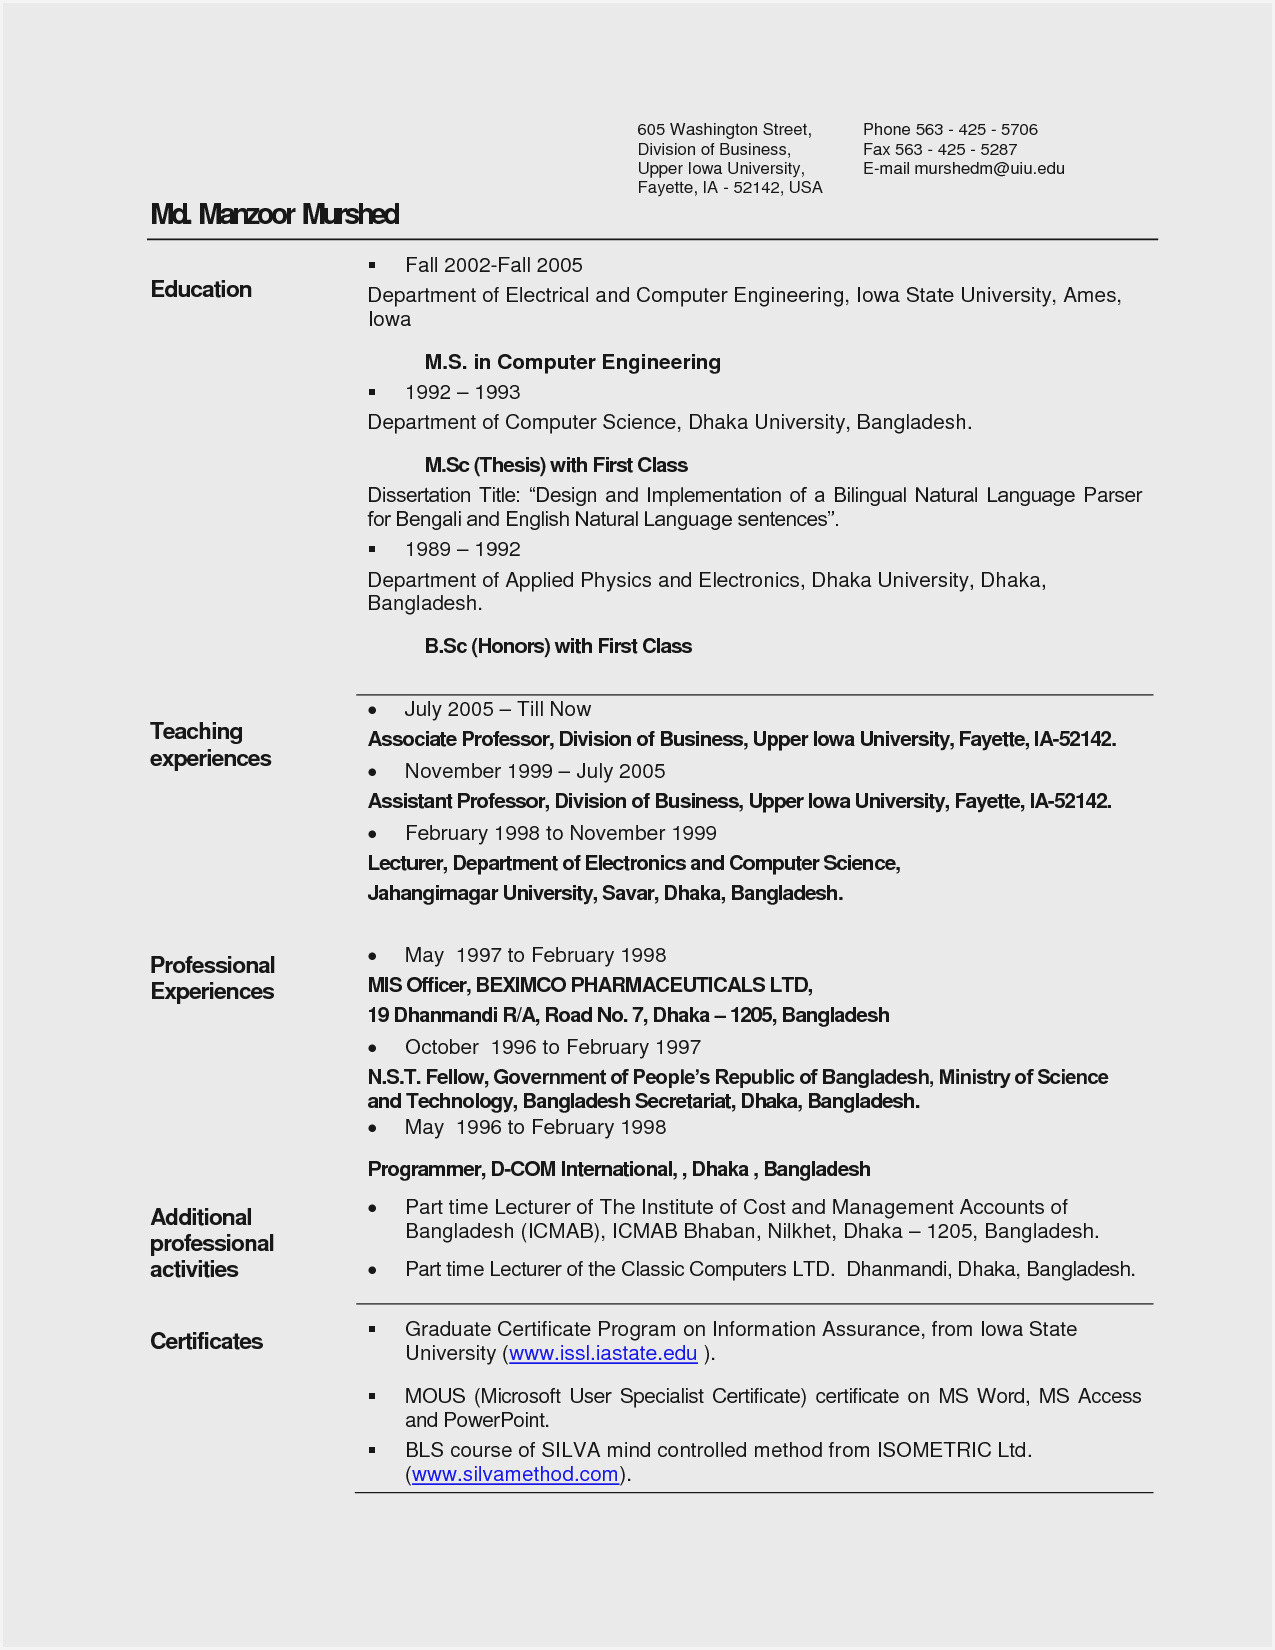 sample resume for electrical enginer pdfml